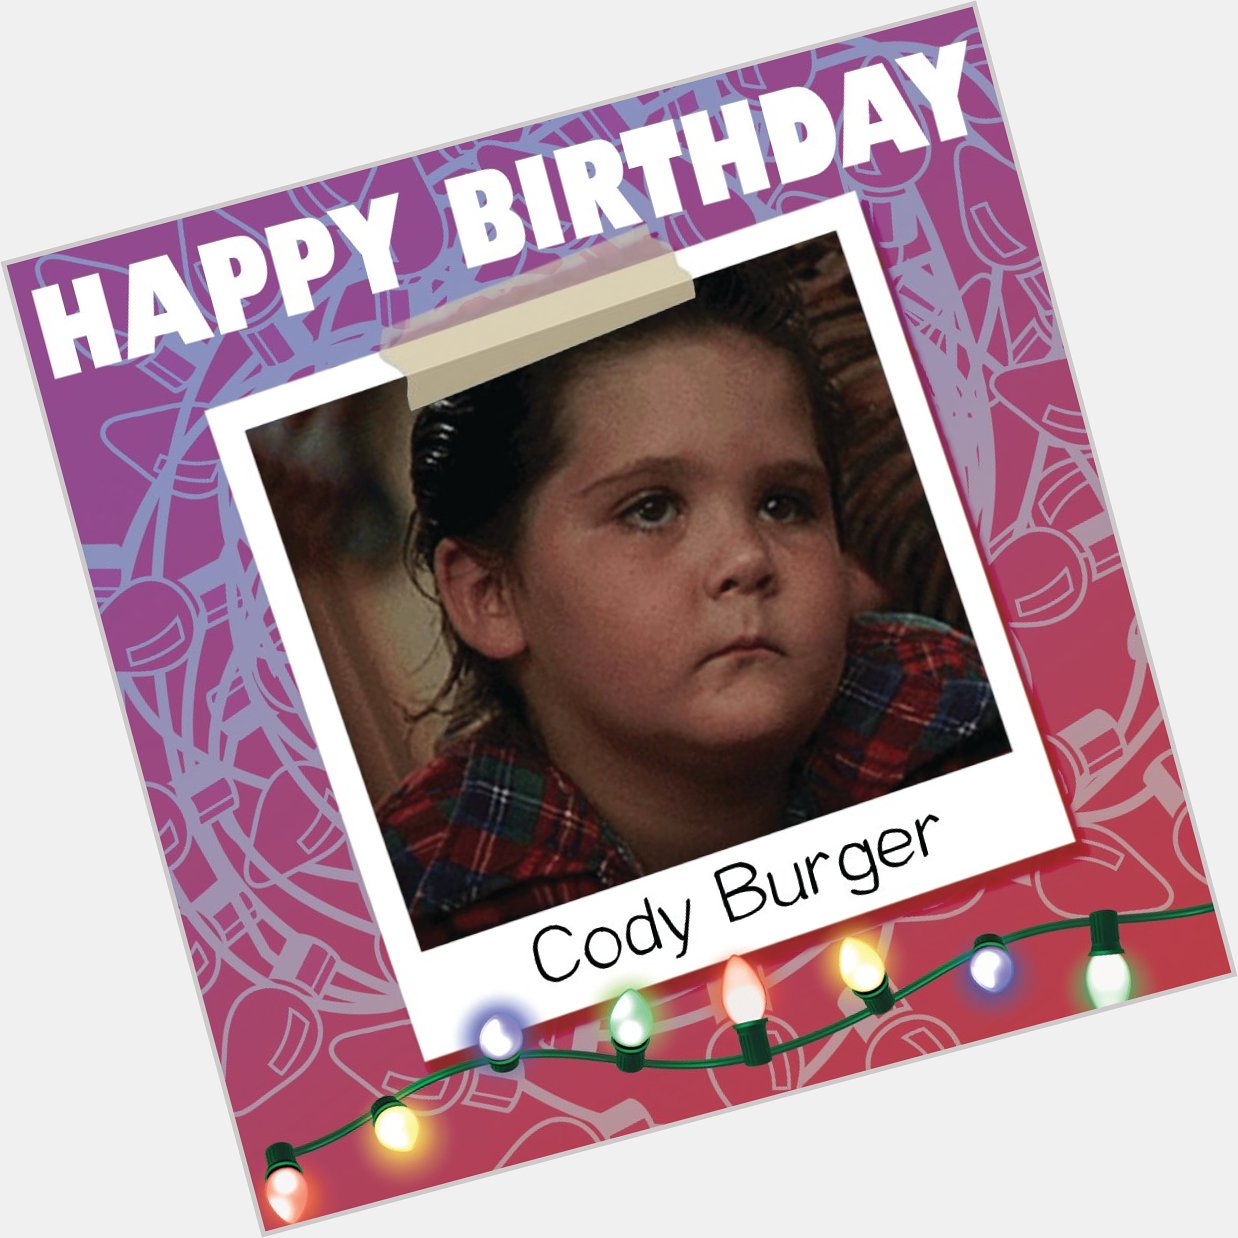 Happy Birthday Cody Burger!

Shop Online:
 